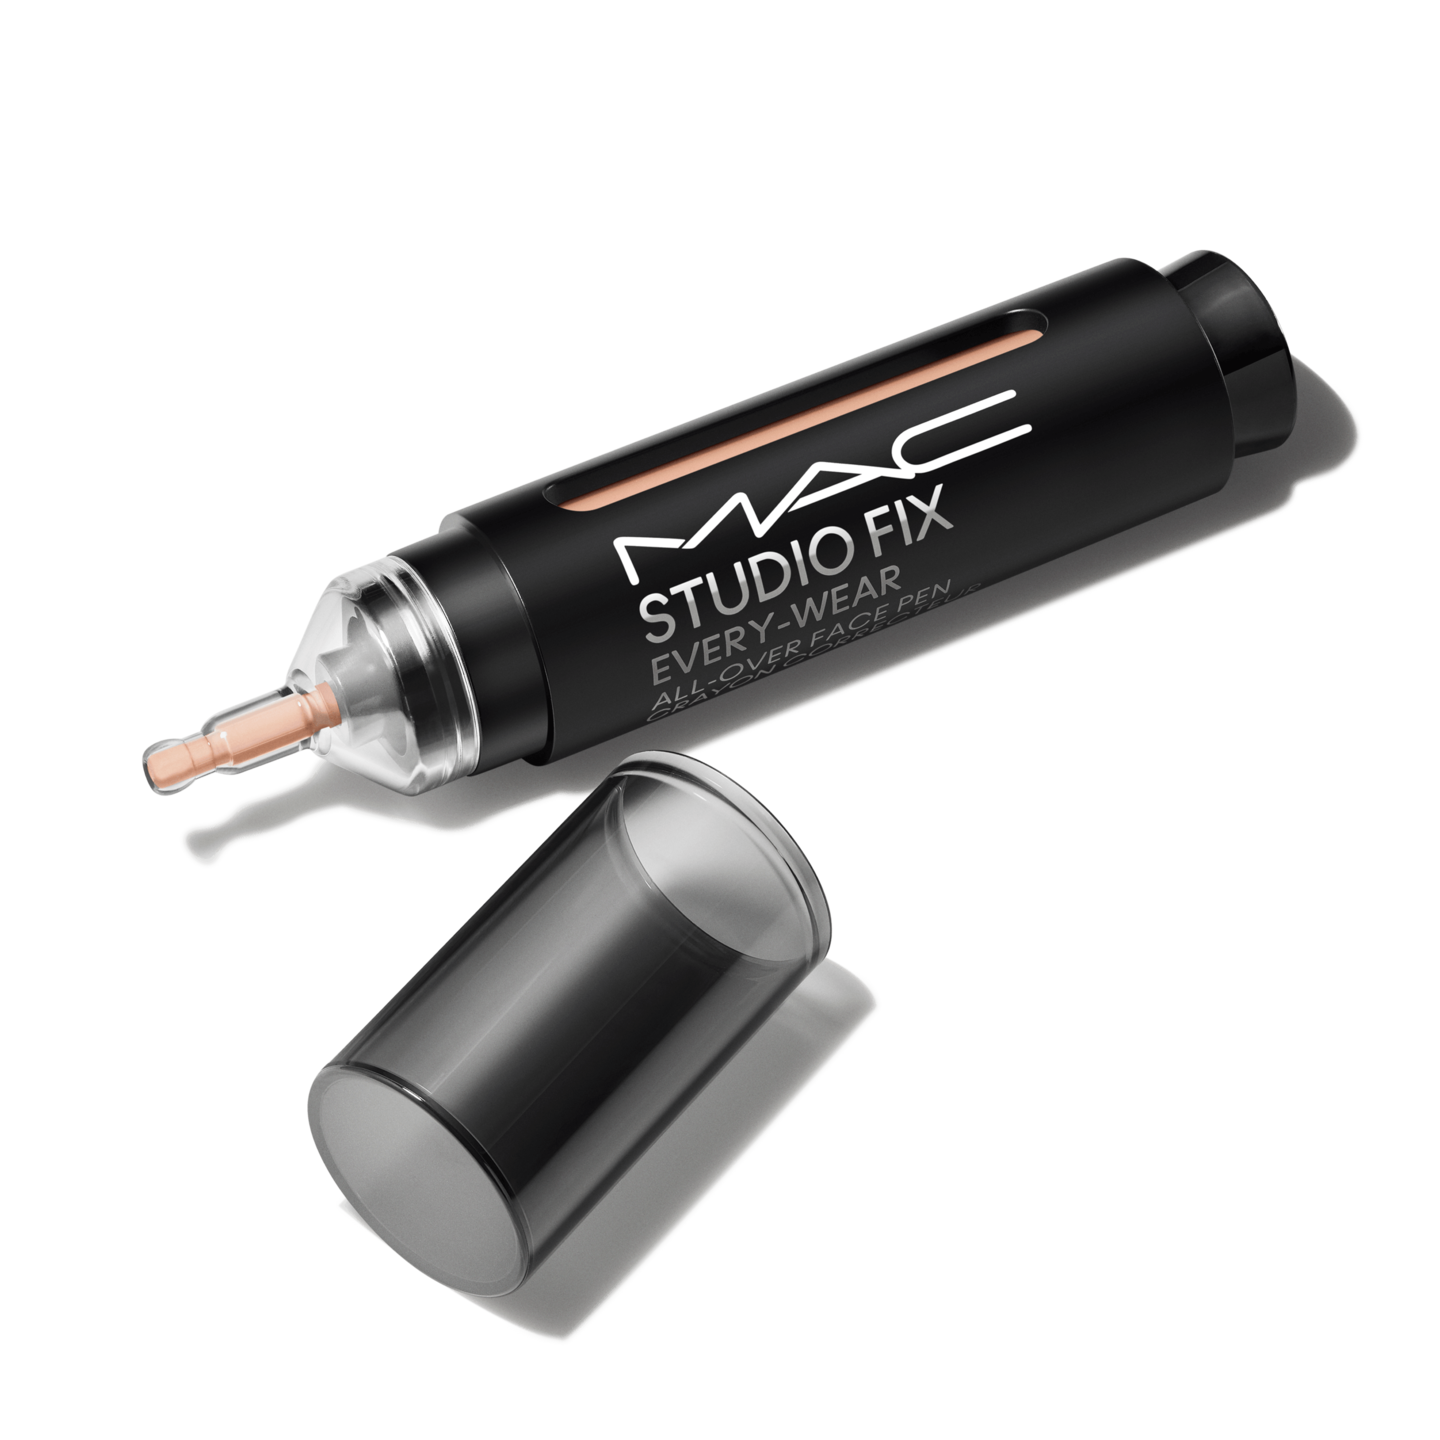 Studio Fix Every-Wear All-Over Face Pen | MAC Cosmetics Canada 